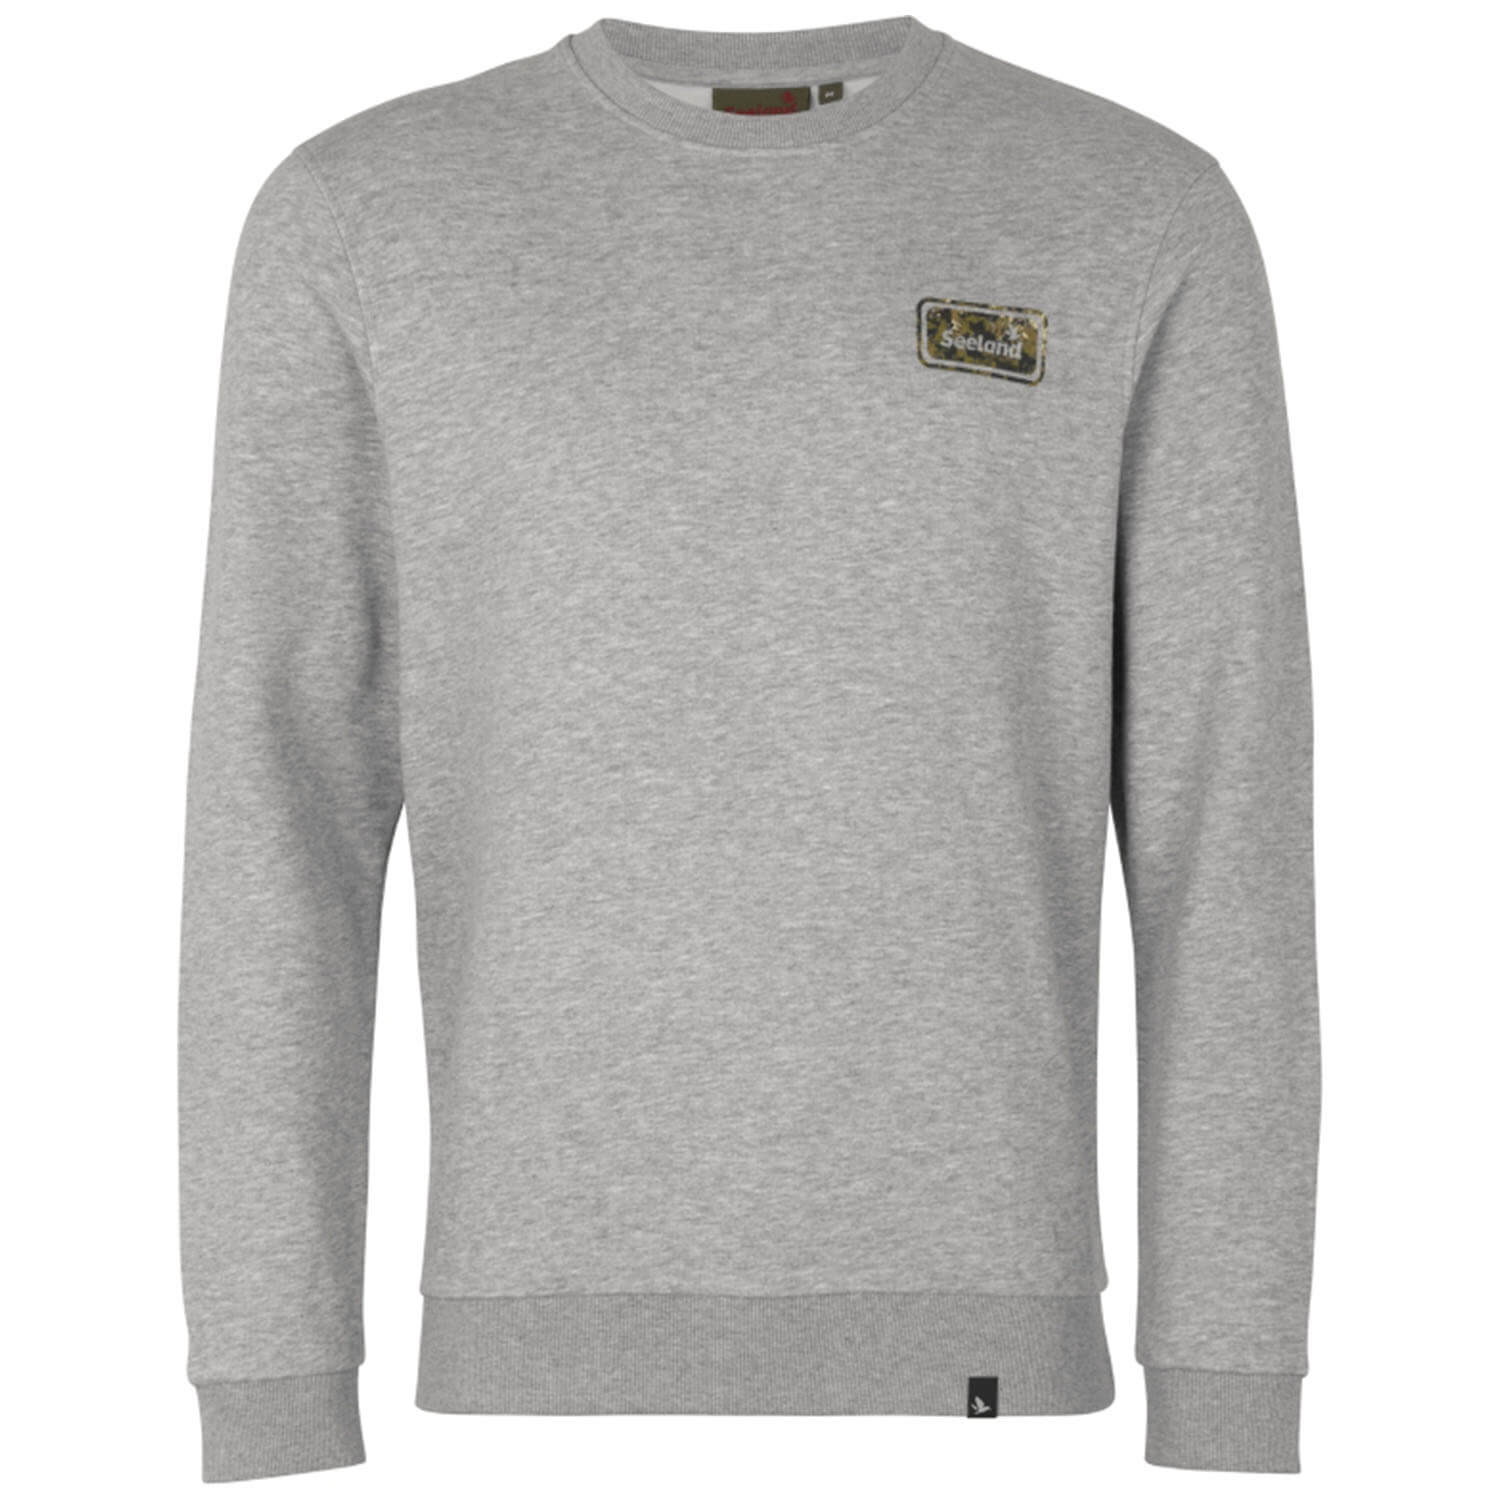 Seeland Sweatshirt Cryo (Dark Grey Melange) - Sweaters & Jerseys